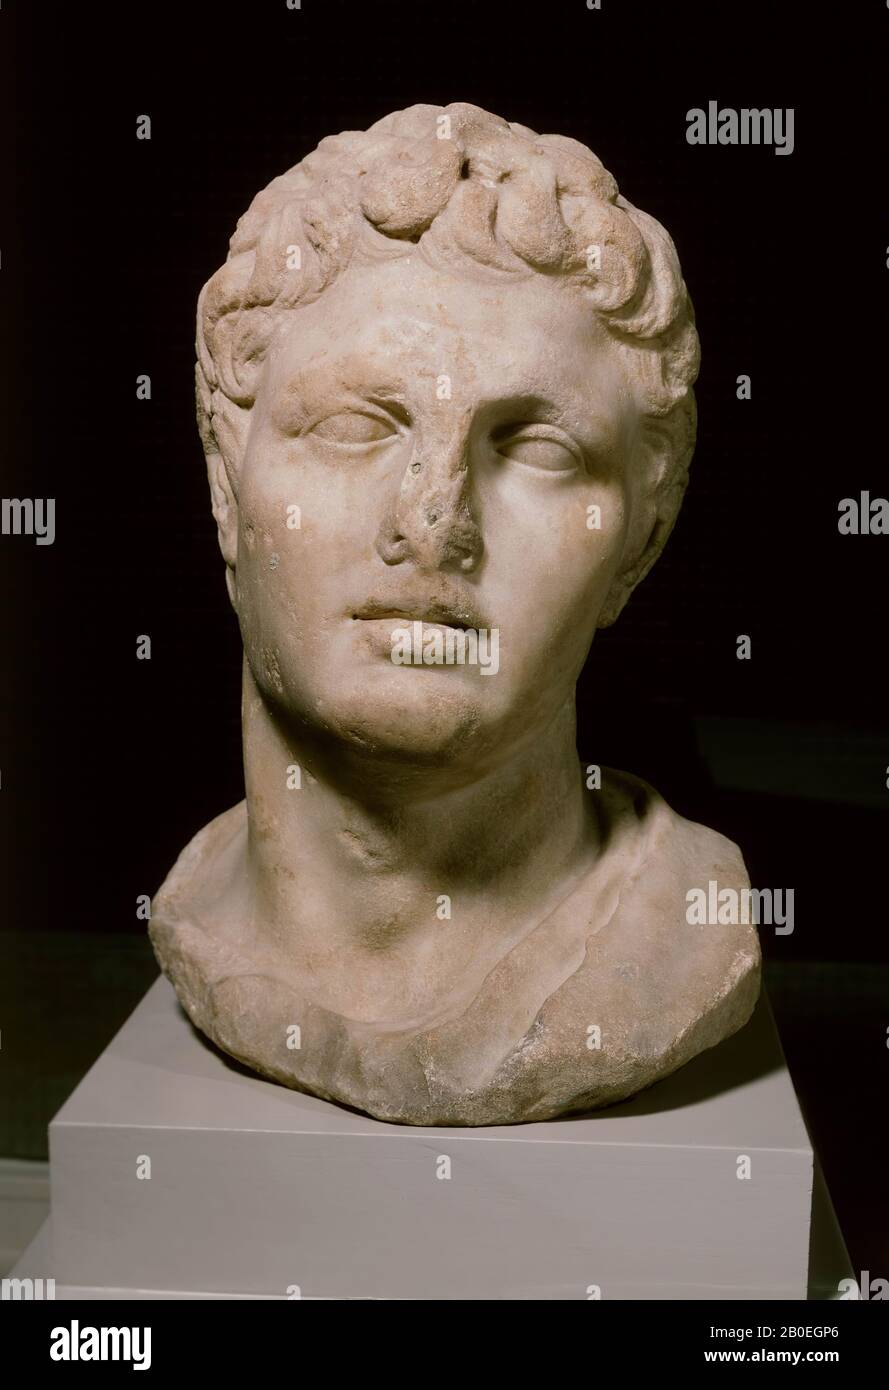 Klassisches Altertum, Kopf, Männerkopf, Stein, Marmor, 45 cm, Republikaner 300-200 v. Chr. Stockfoto